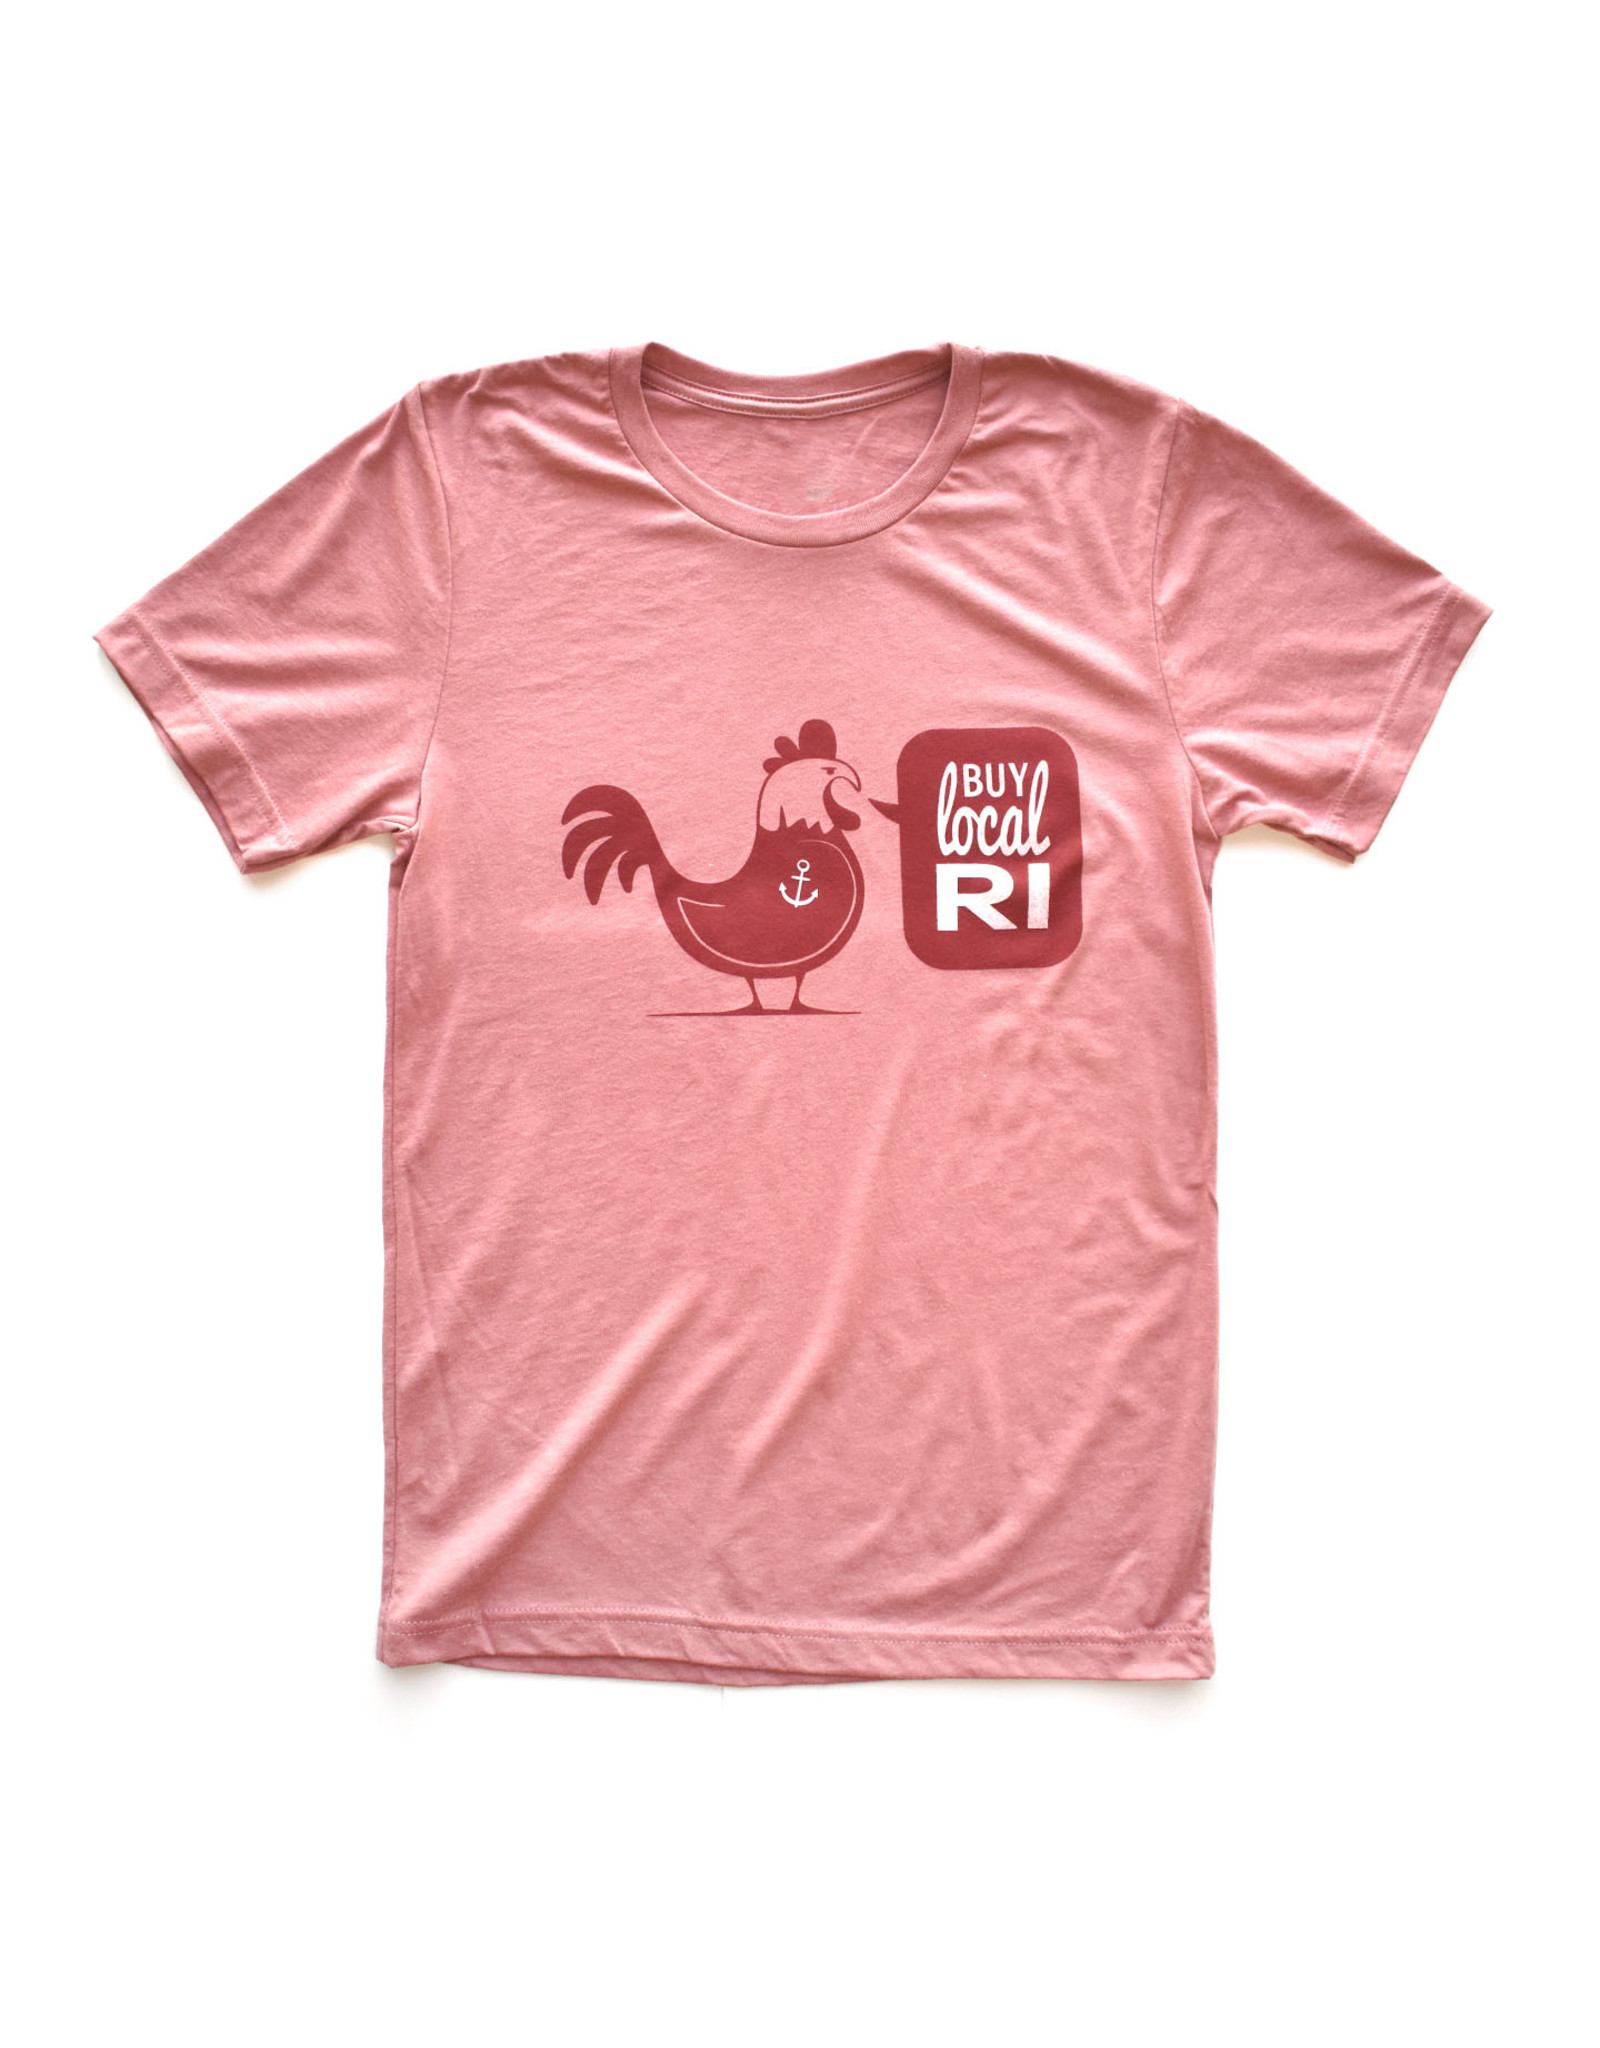 Buy Local RI T-Shirt - 1st Edition!